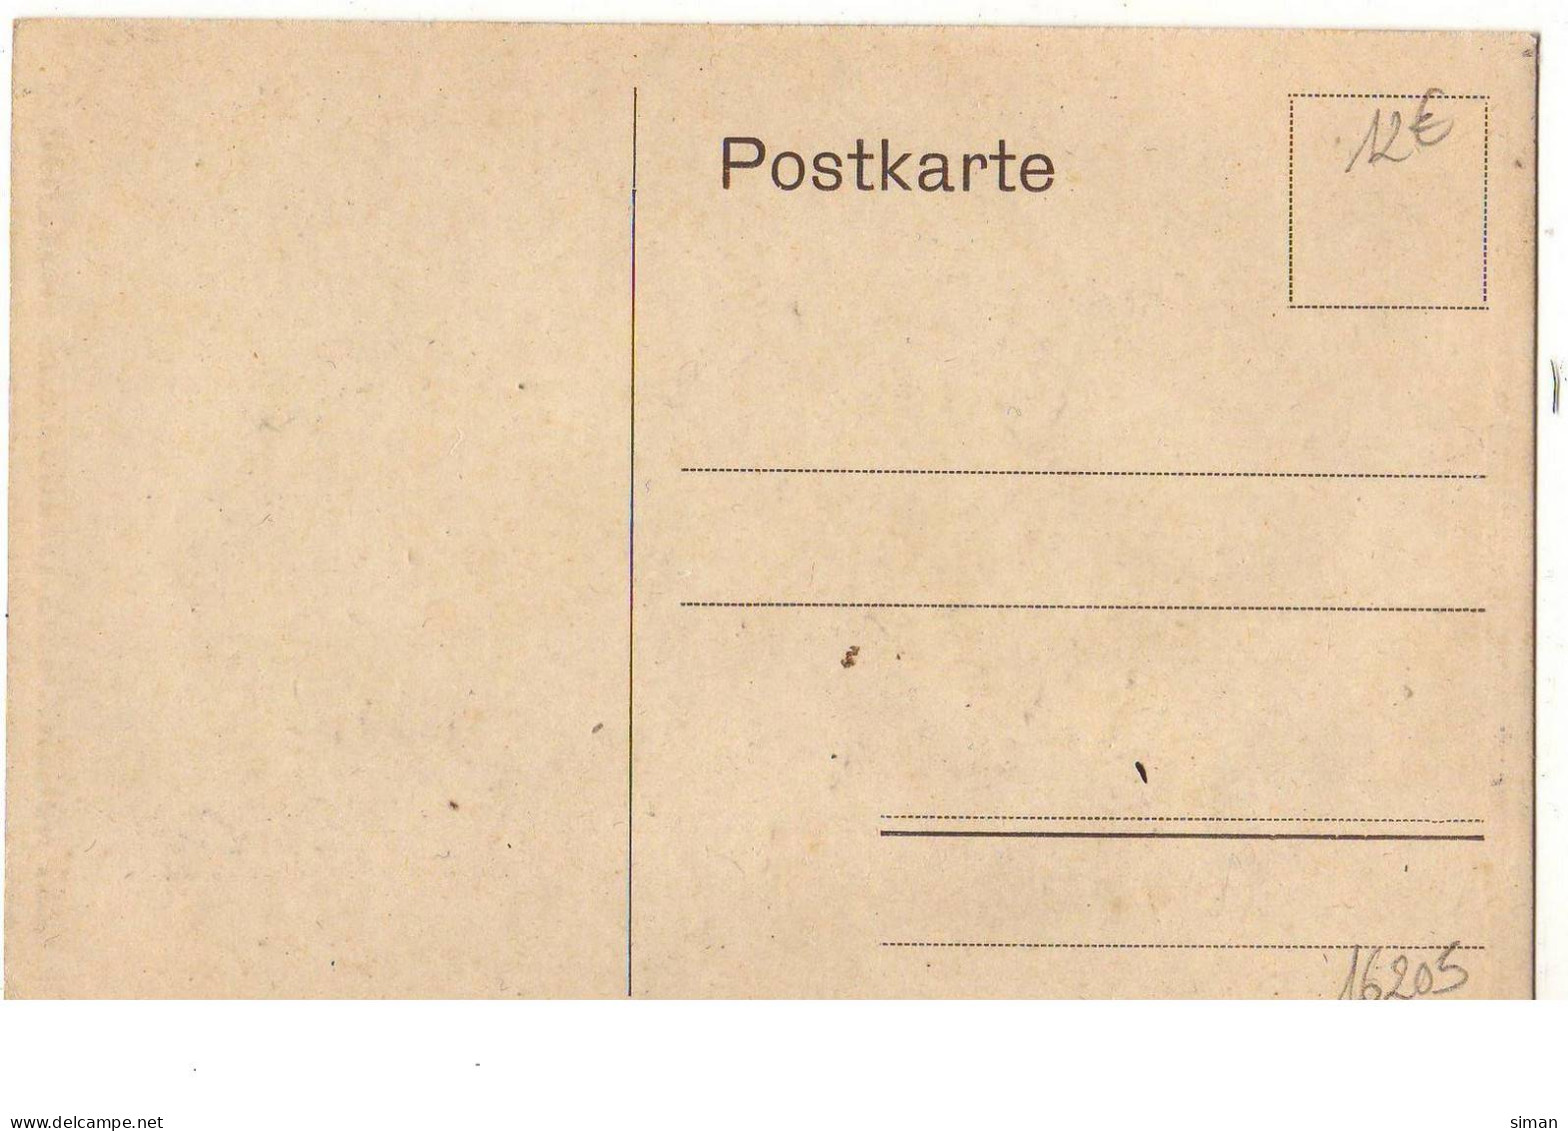 N°16205 - Silhouette D'un Homme - Gebh. Wagner - Deutsche Gewerbeschau Munchen 1922 - Silhouetkaarten